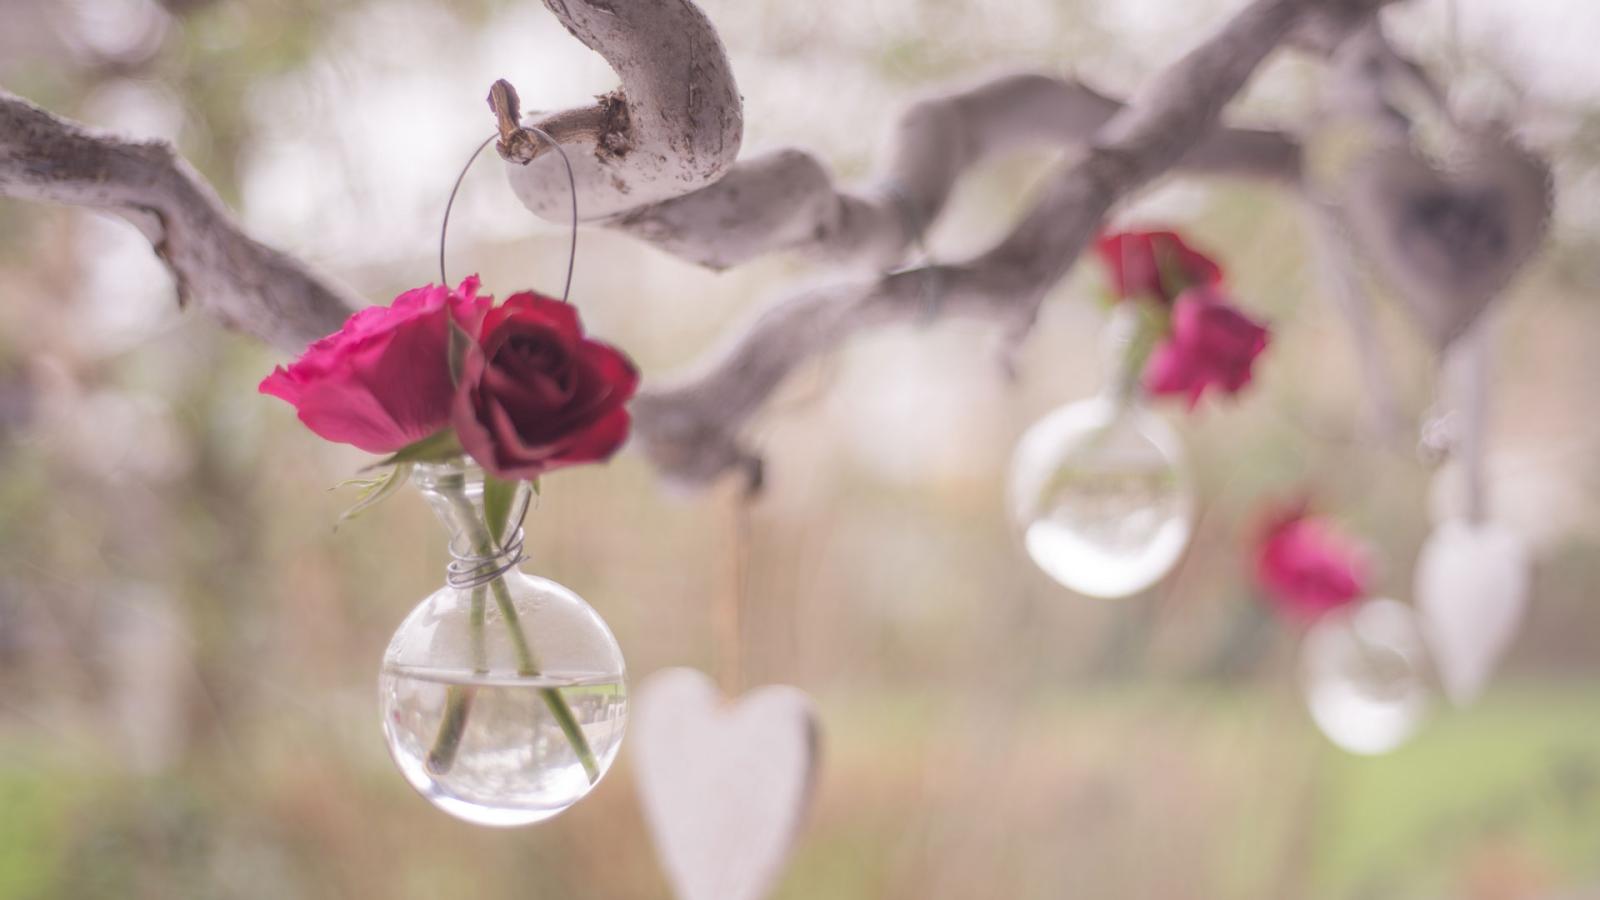 Roses in hanging vase